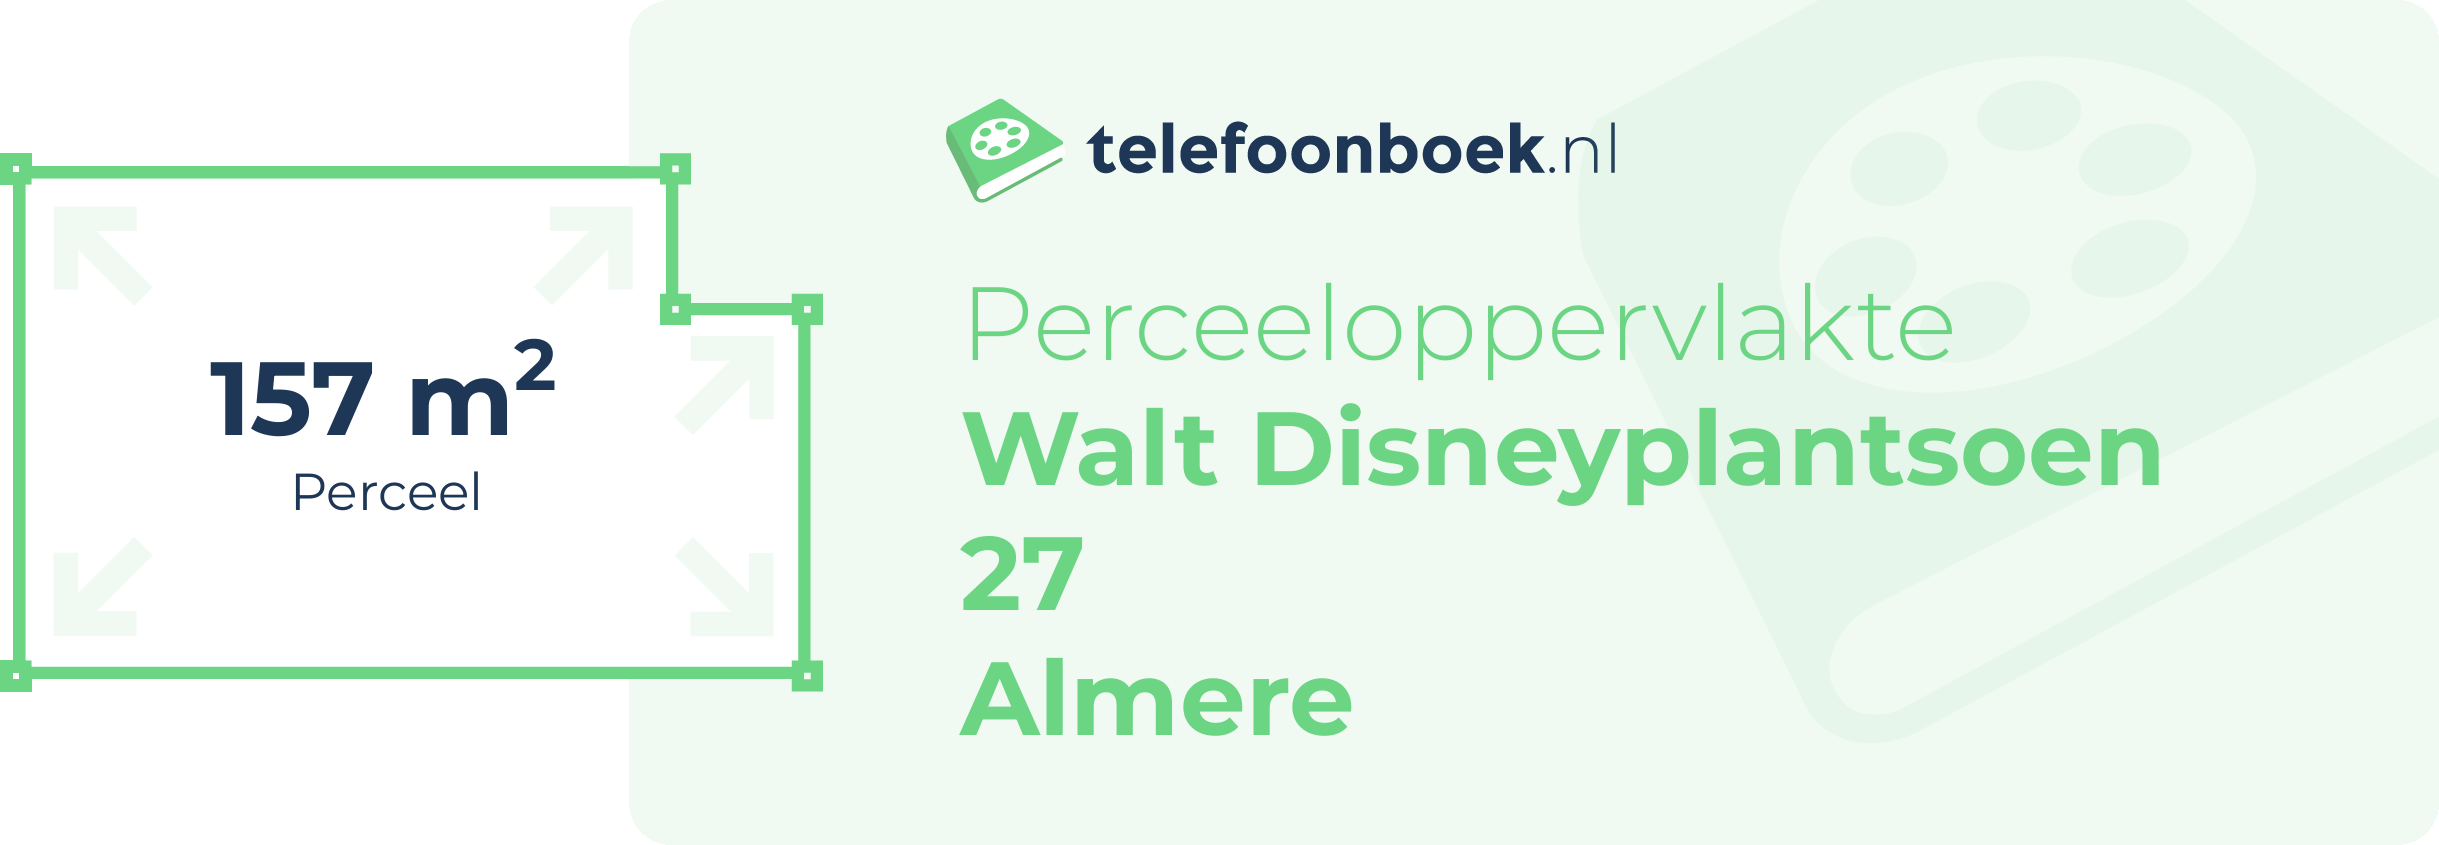 Perceeloppervlakte Walt Disneyplantsoen 27 Almere